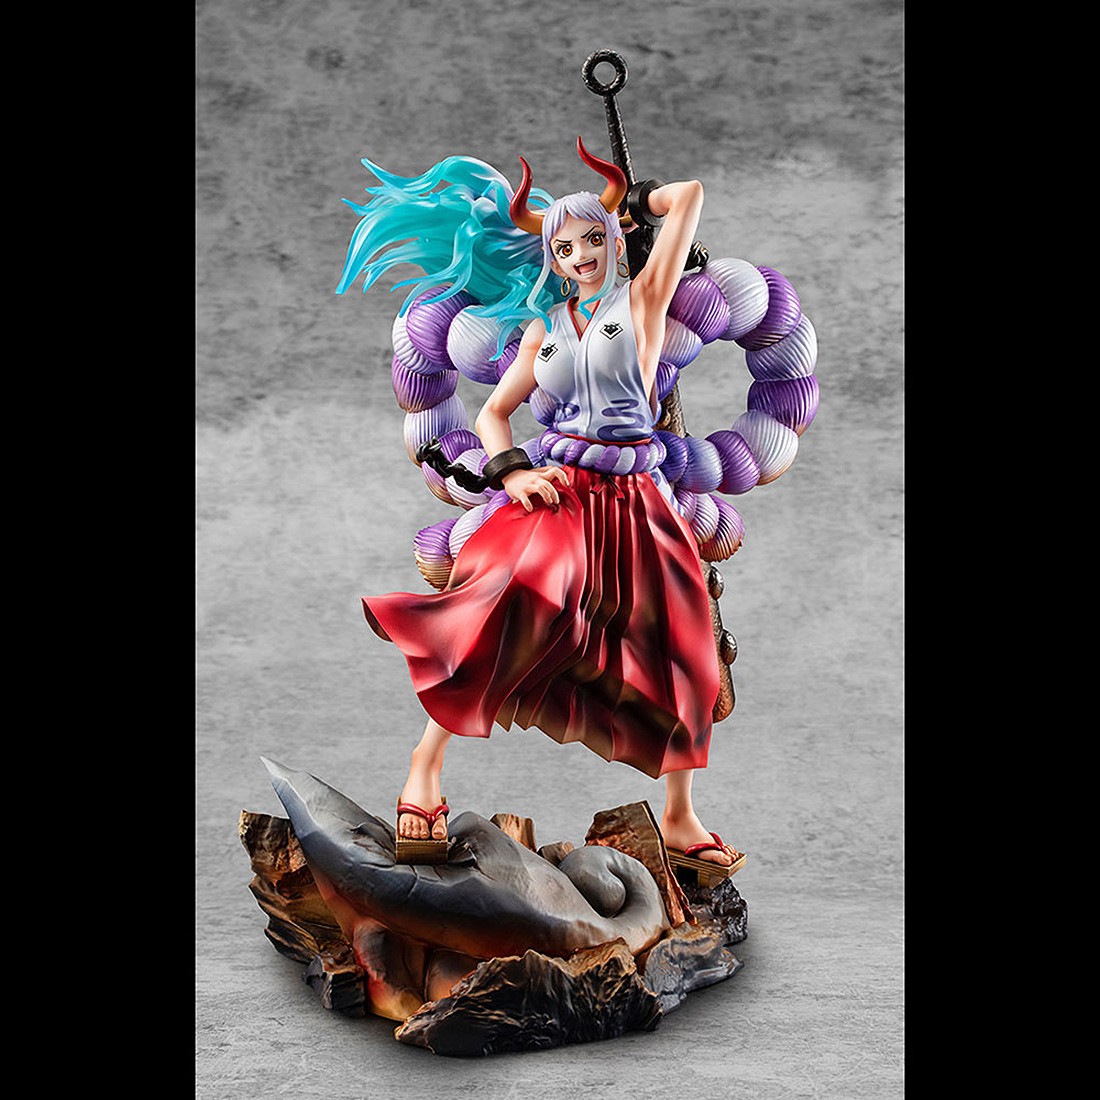 Sabo Fire Fist Inheritance Ver Portrait of Pirates One Piece Limited  Edition Figure